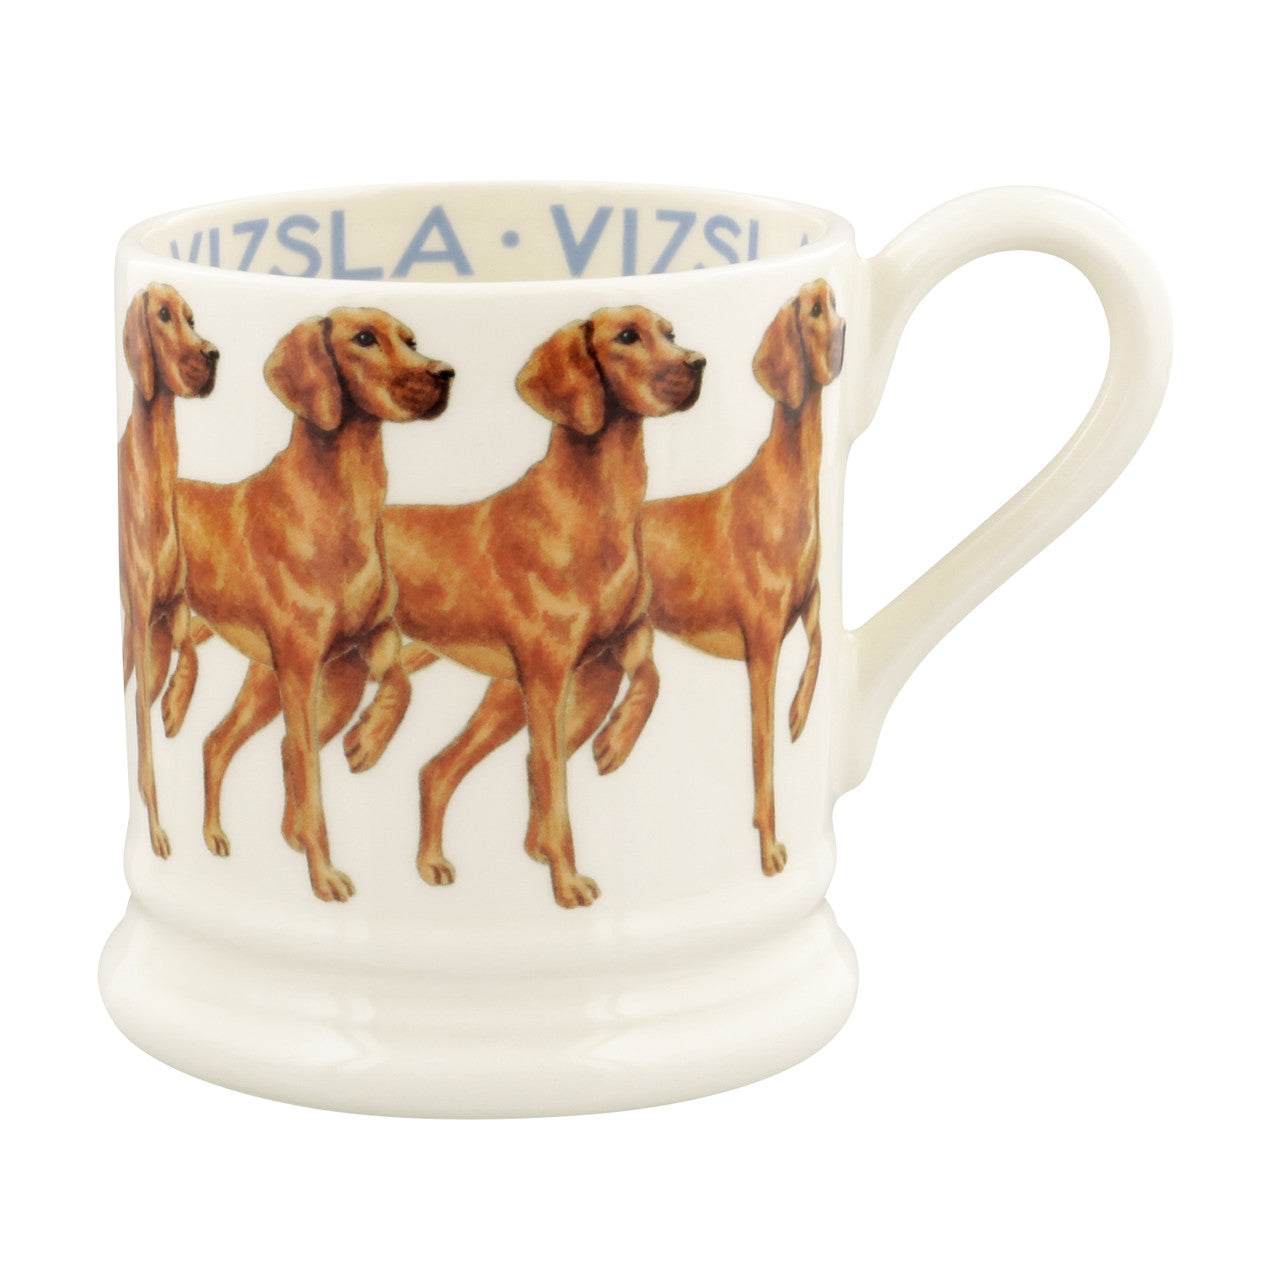 Handmade Vizsla 1/2 pint mug by Emma Bridgewater.